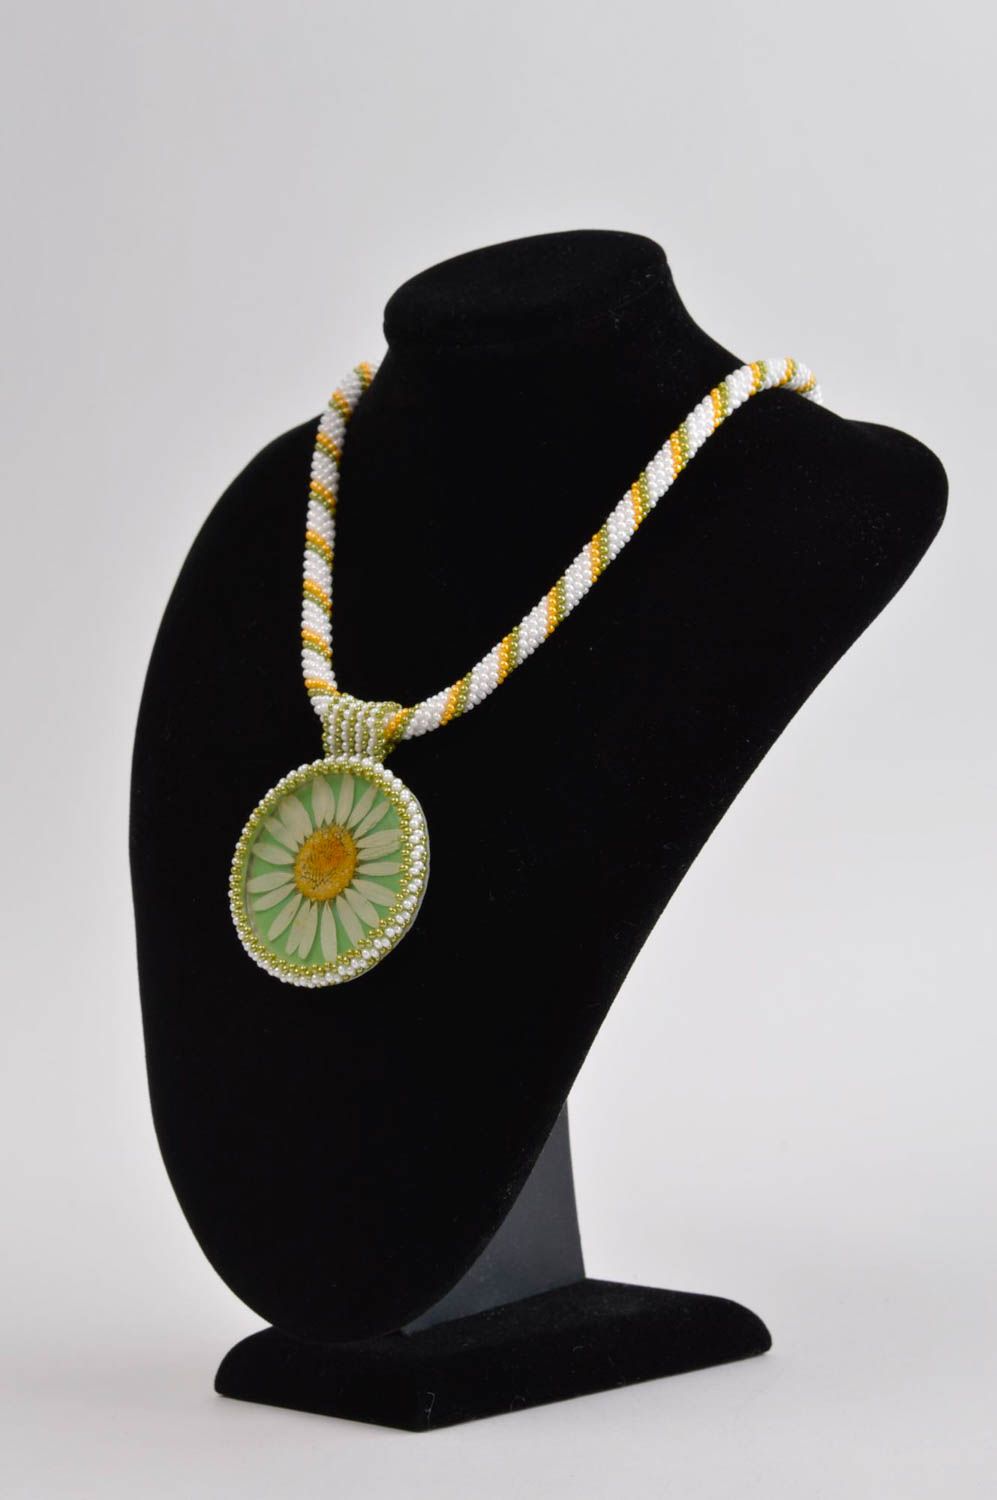 Handmade pendant unusual accessory bead necklace gift ideas resin jewelry photo 1